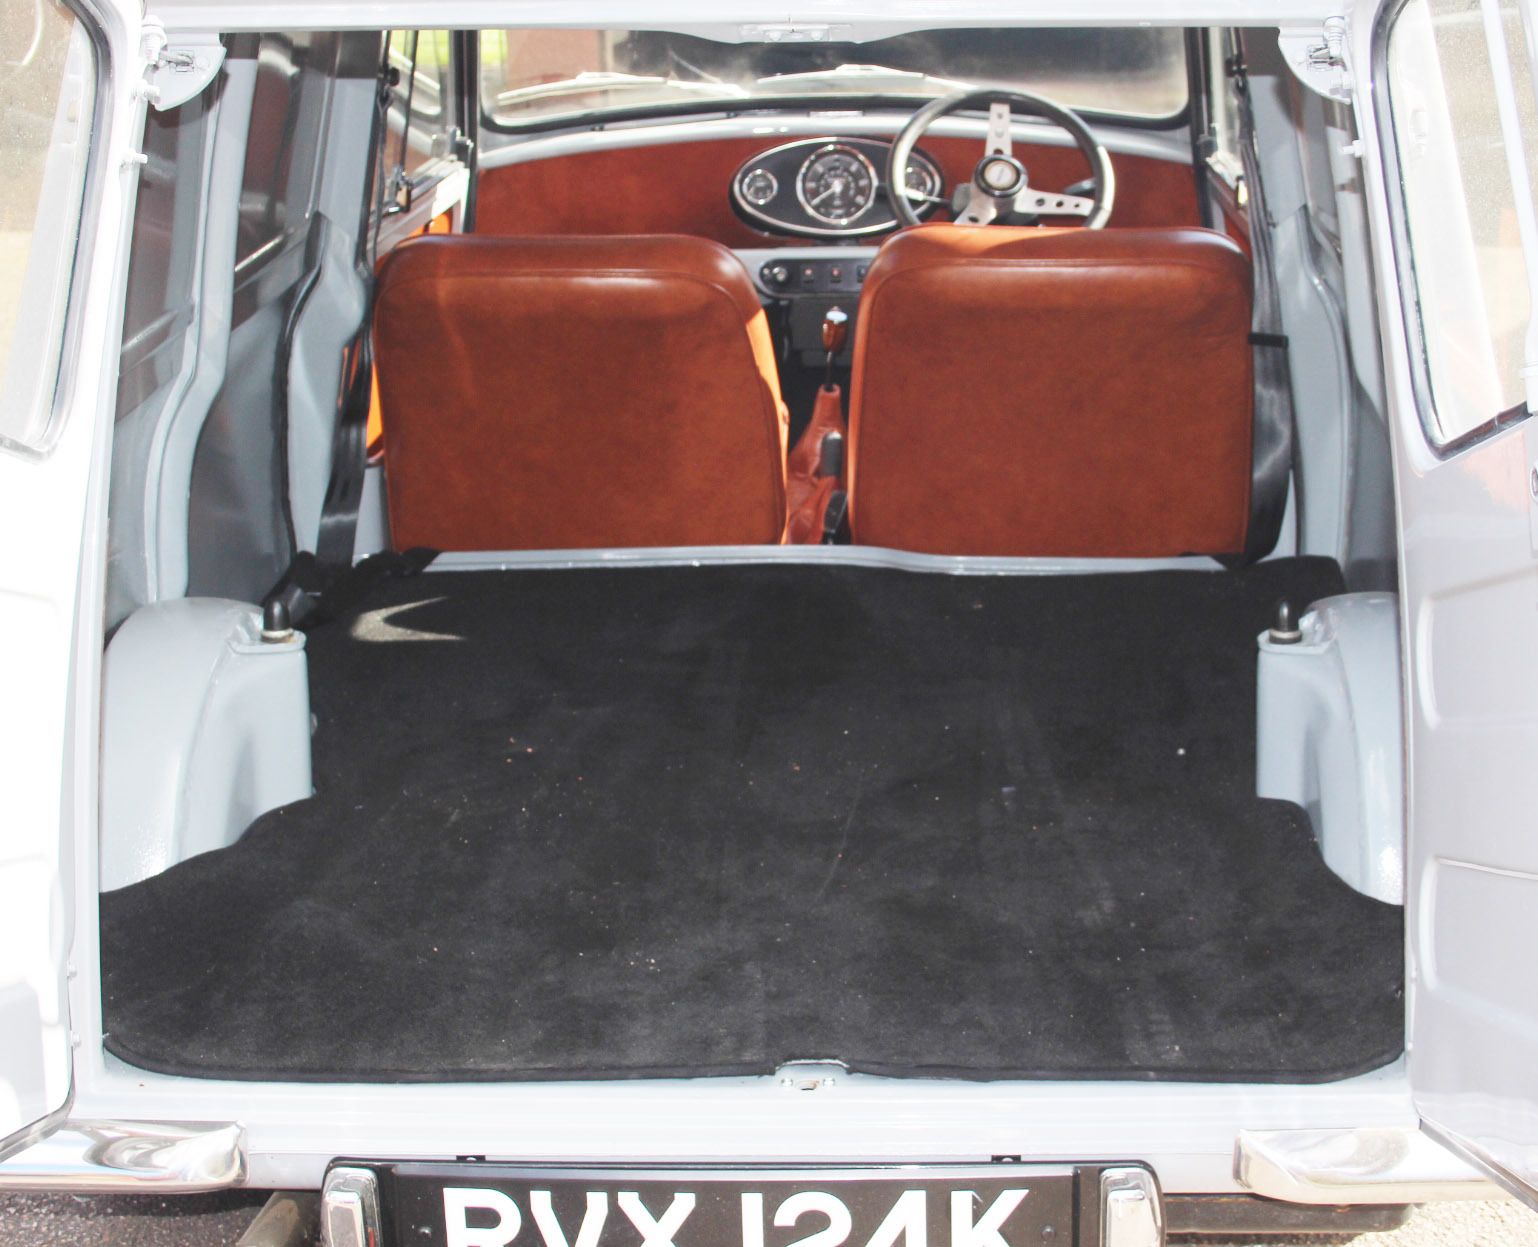 1972 Leyland Mini Van 1000 Make: Leyland Model: Mini Van 1000 Registration: RVX 124K Year: - Image 8 of 10